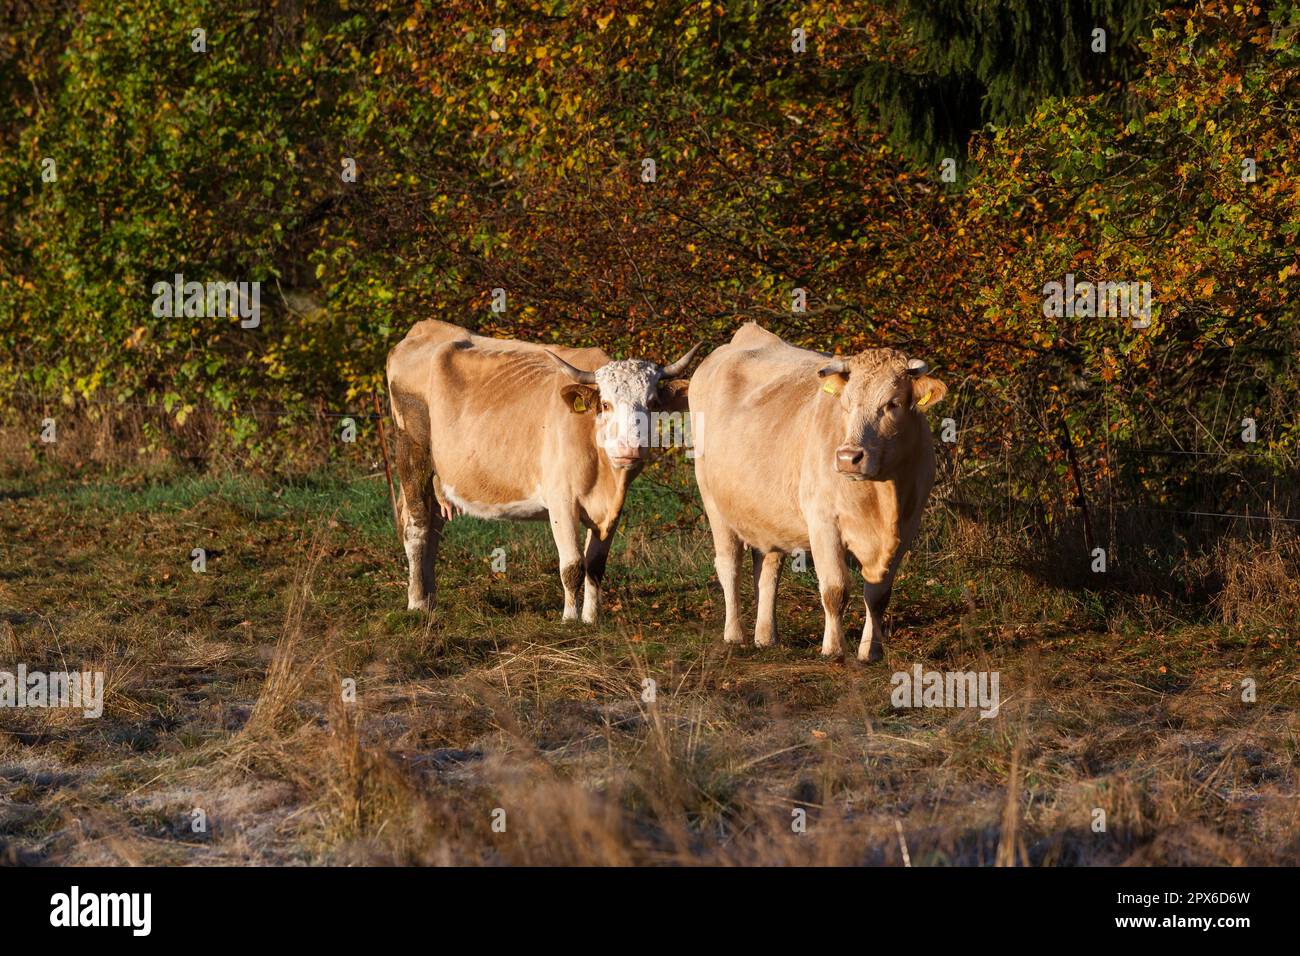 Agriculture Animal Husbandry Free Range Cow Herd Stock Photo